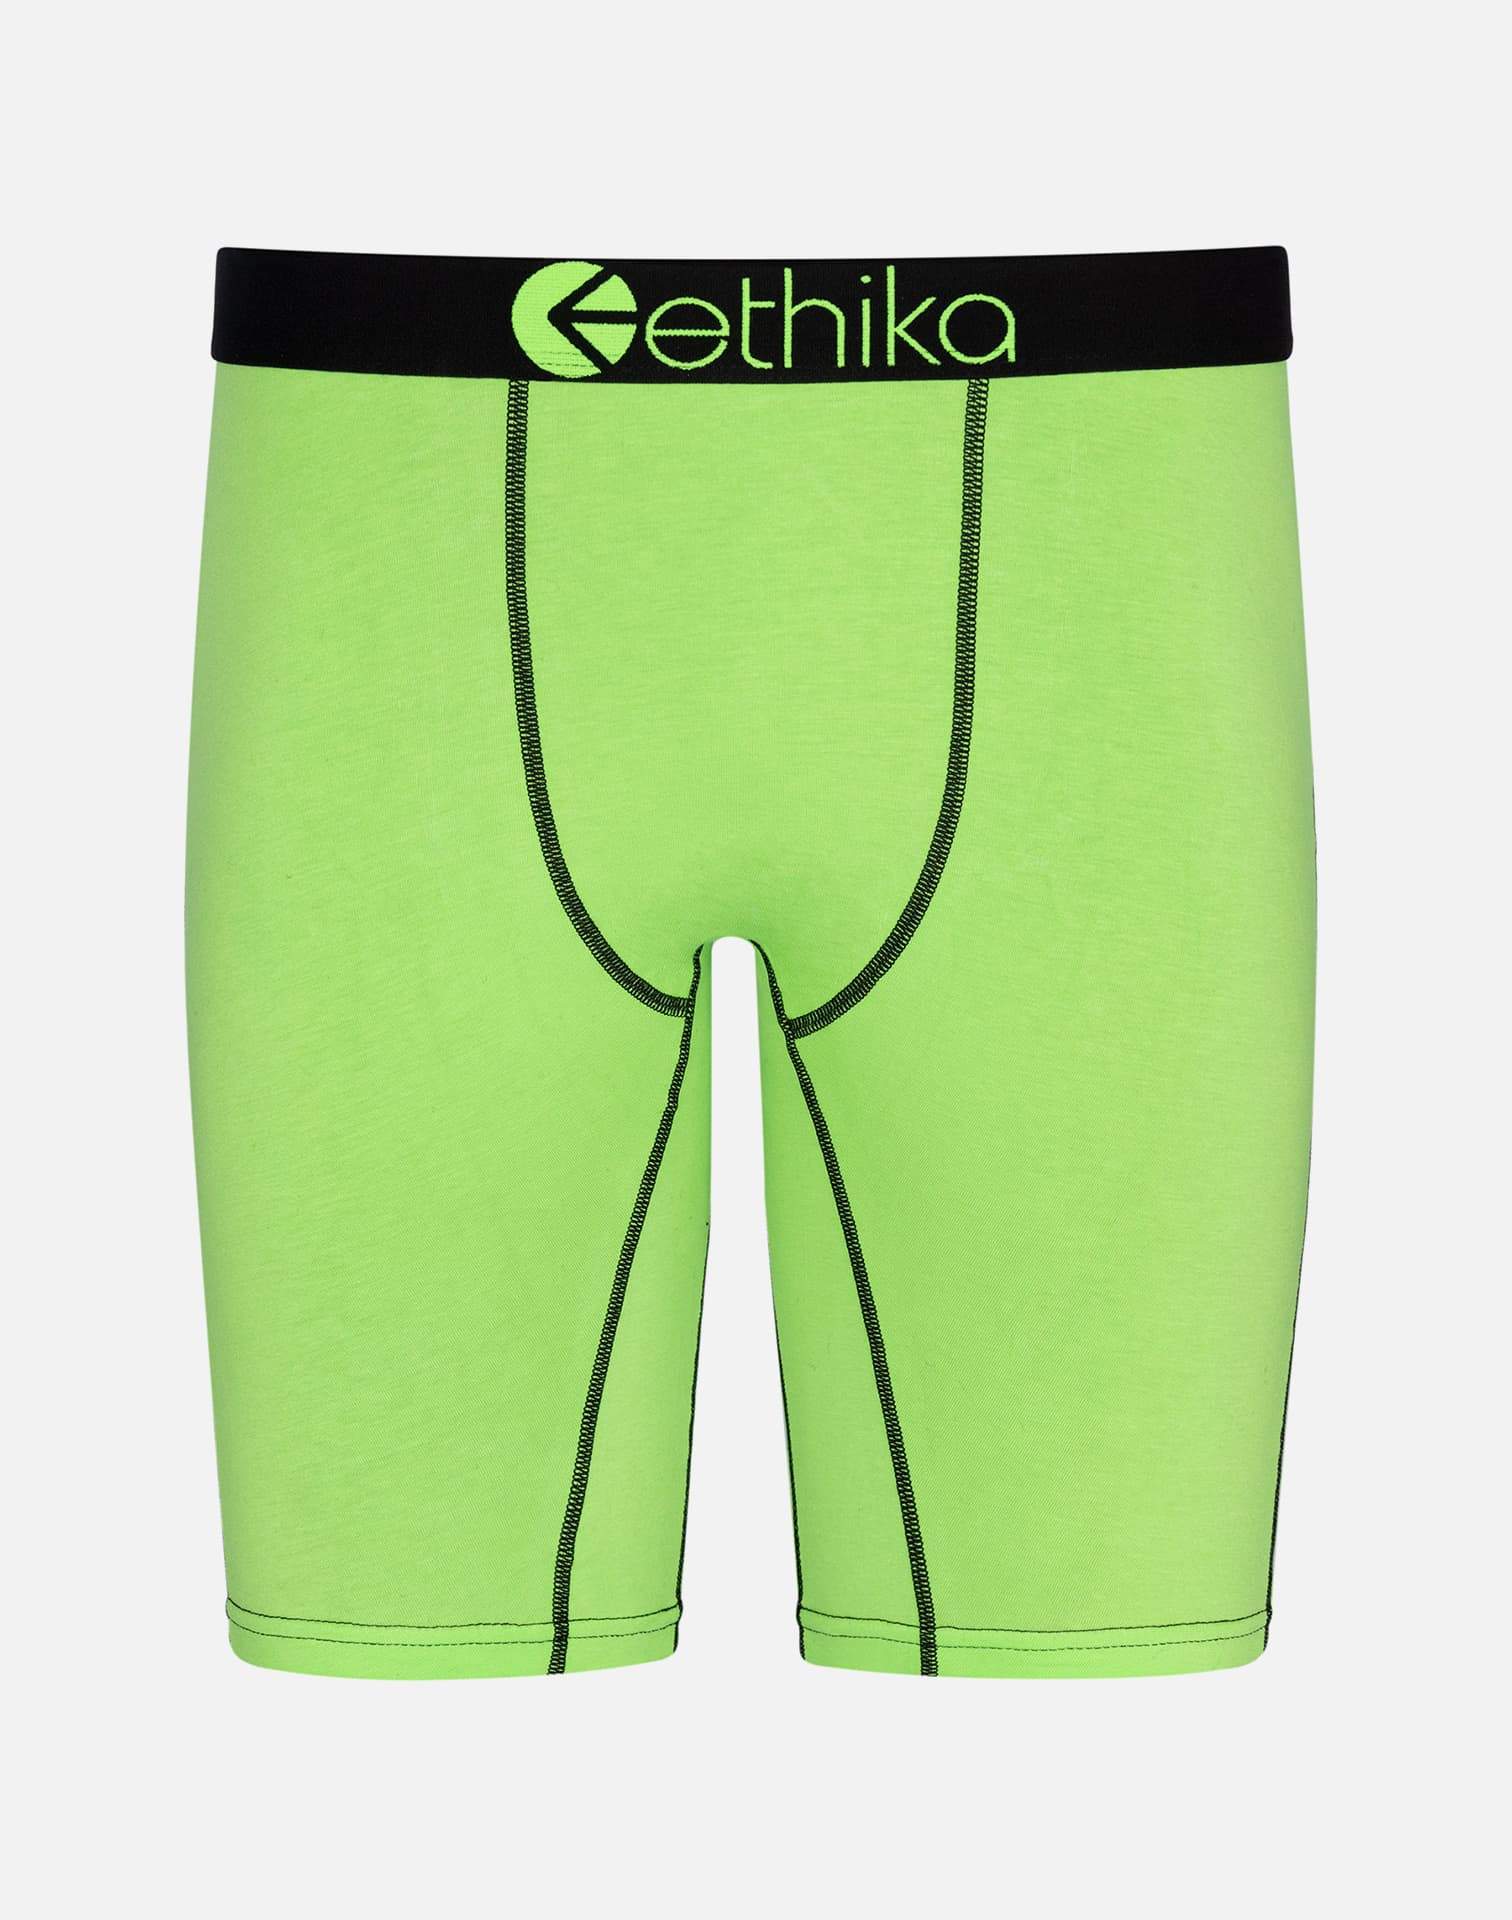 Ethika Men's Solid Highlight Boxer Briefs